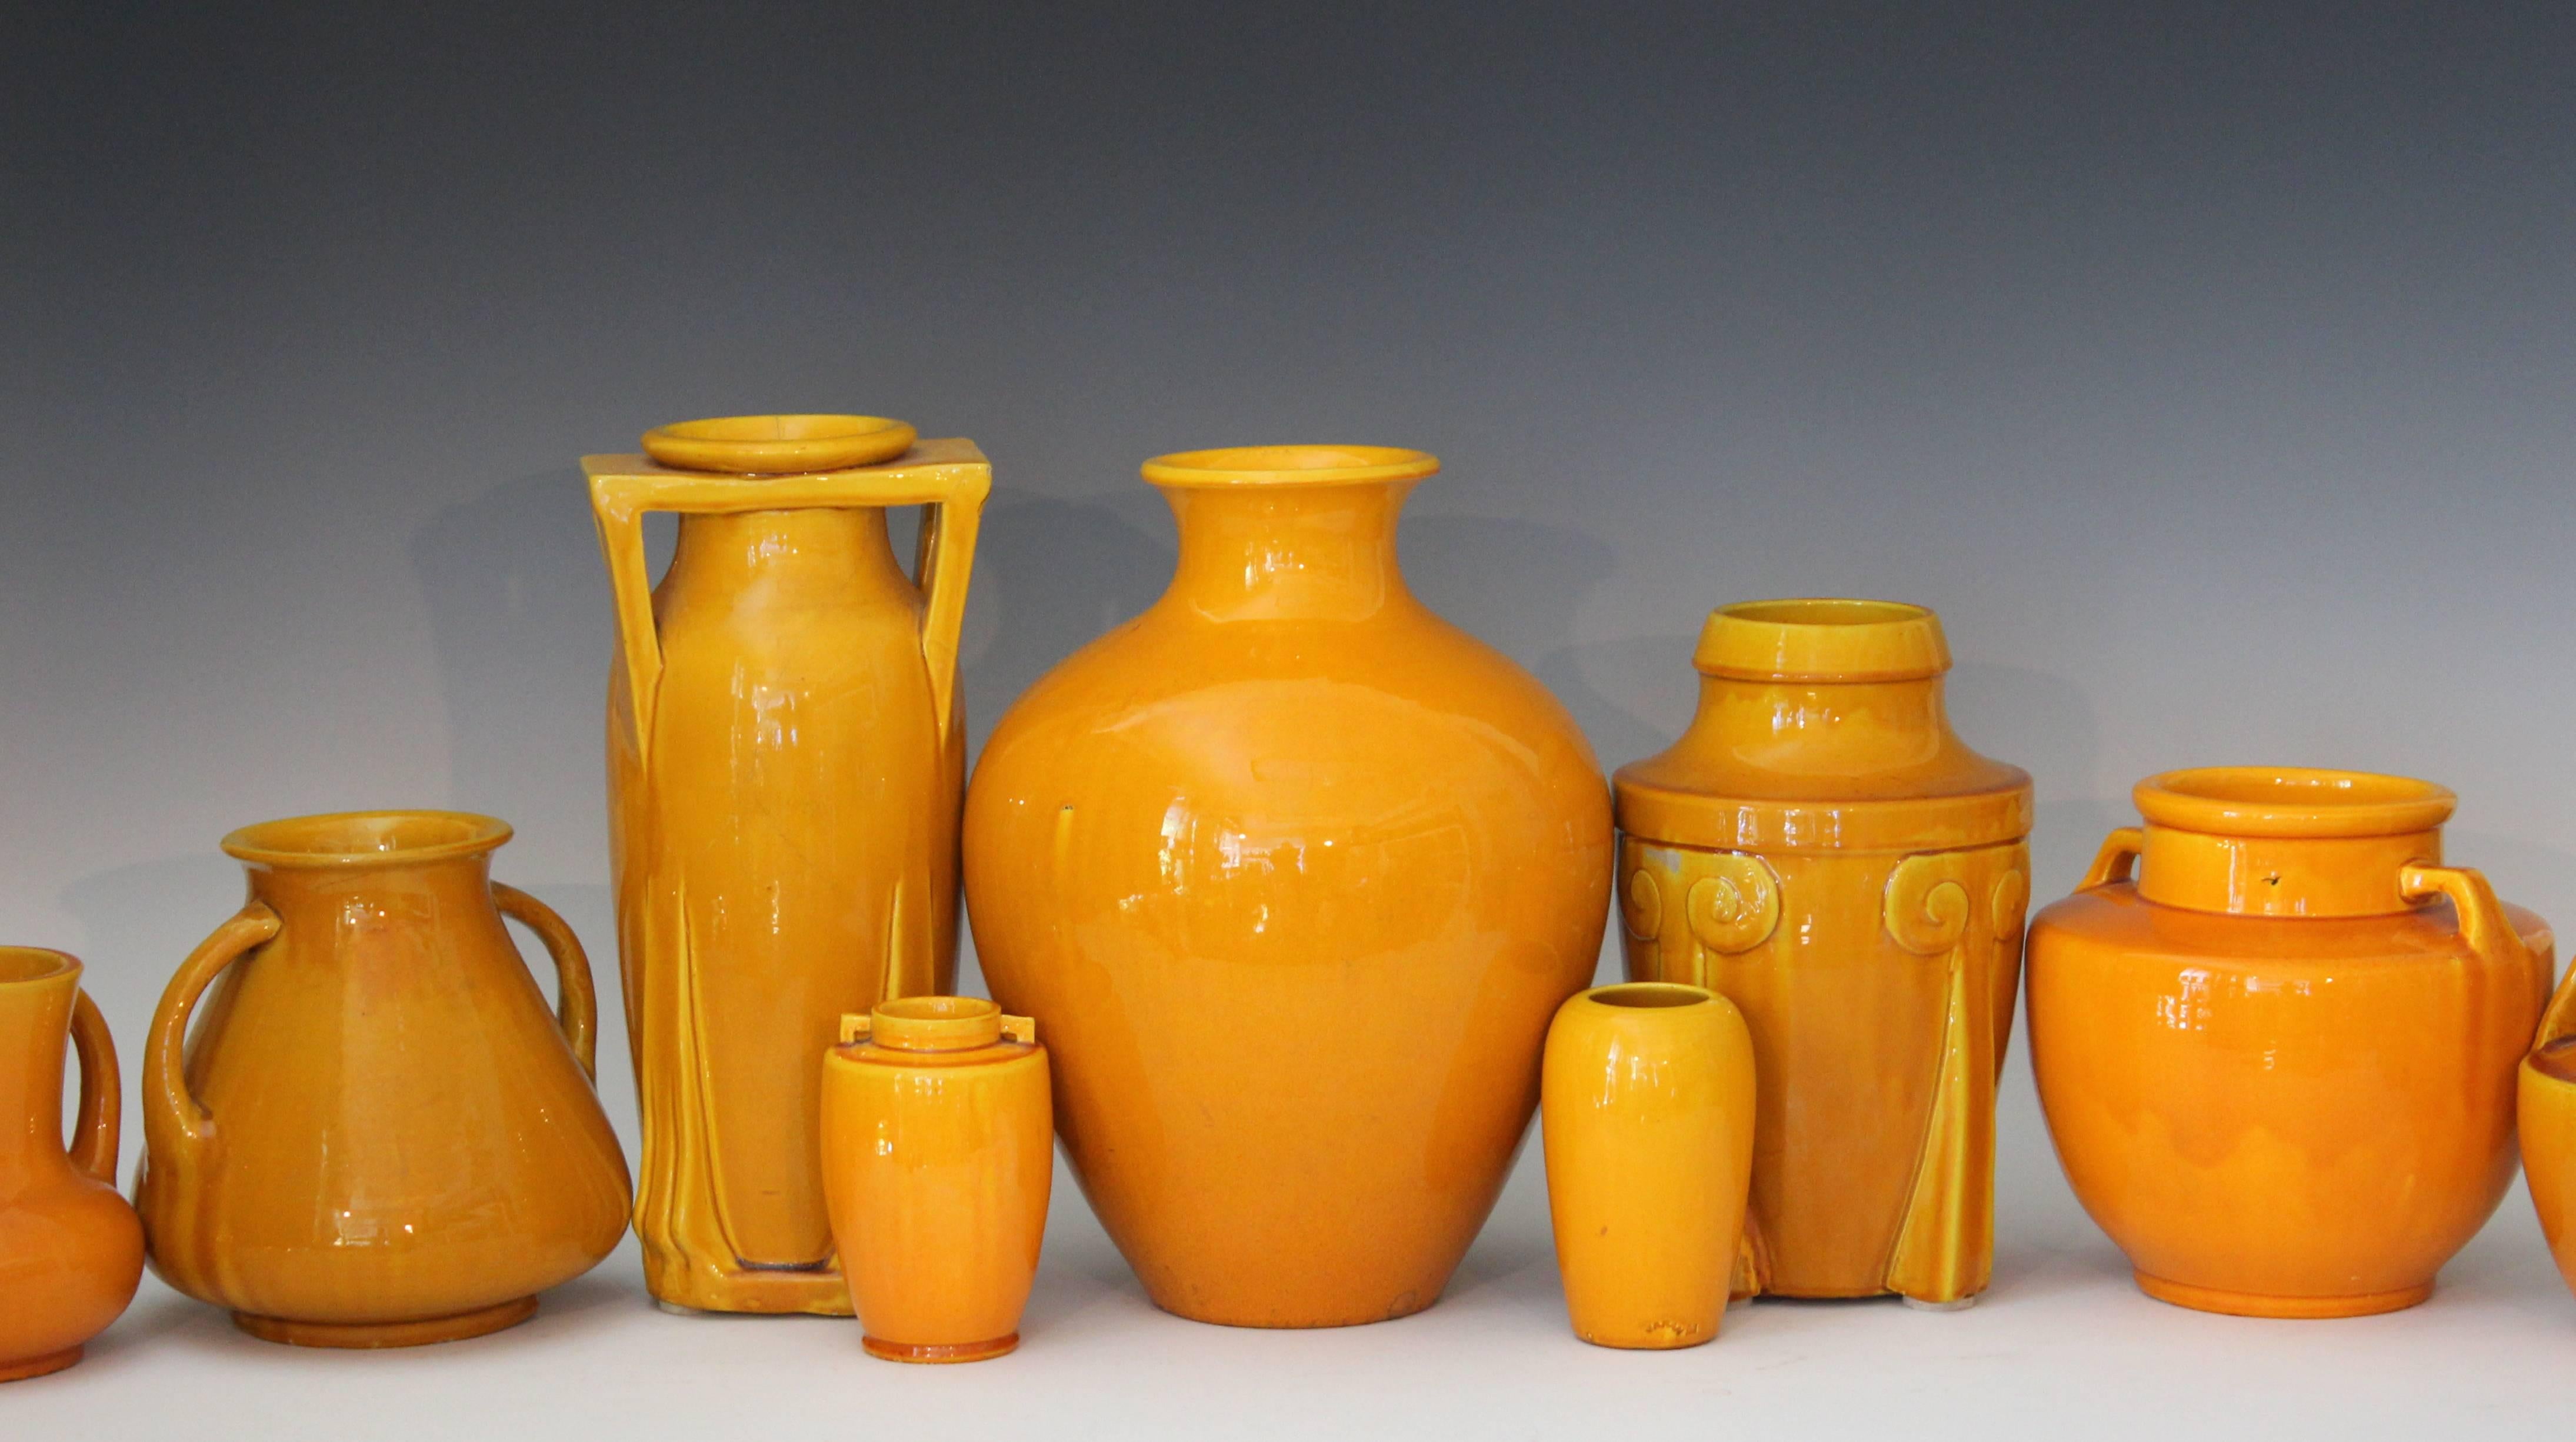 Awaji Pottery Japanese Art Deco Vase with Bright Yellow Monochrome Glaze For Sale 2